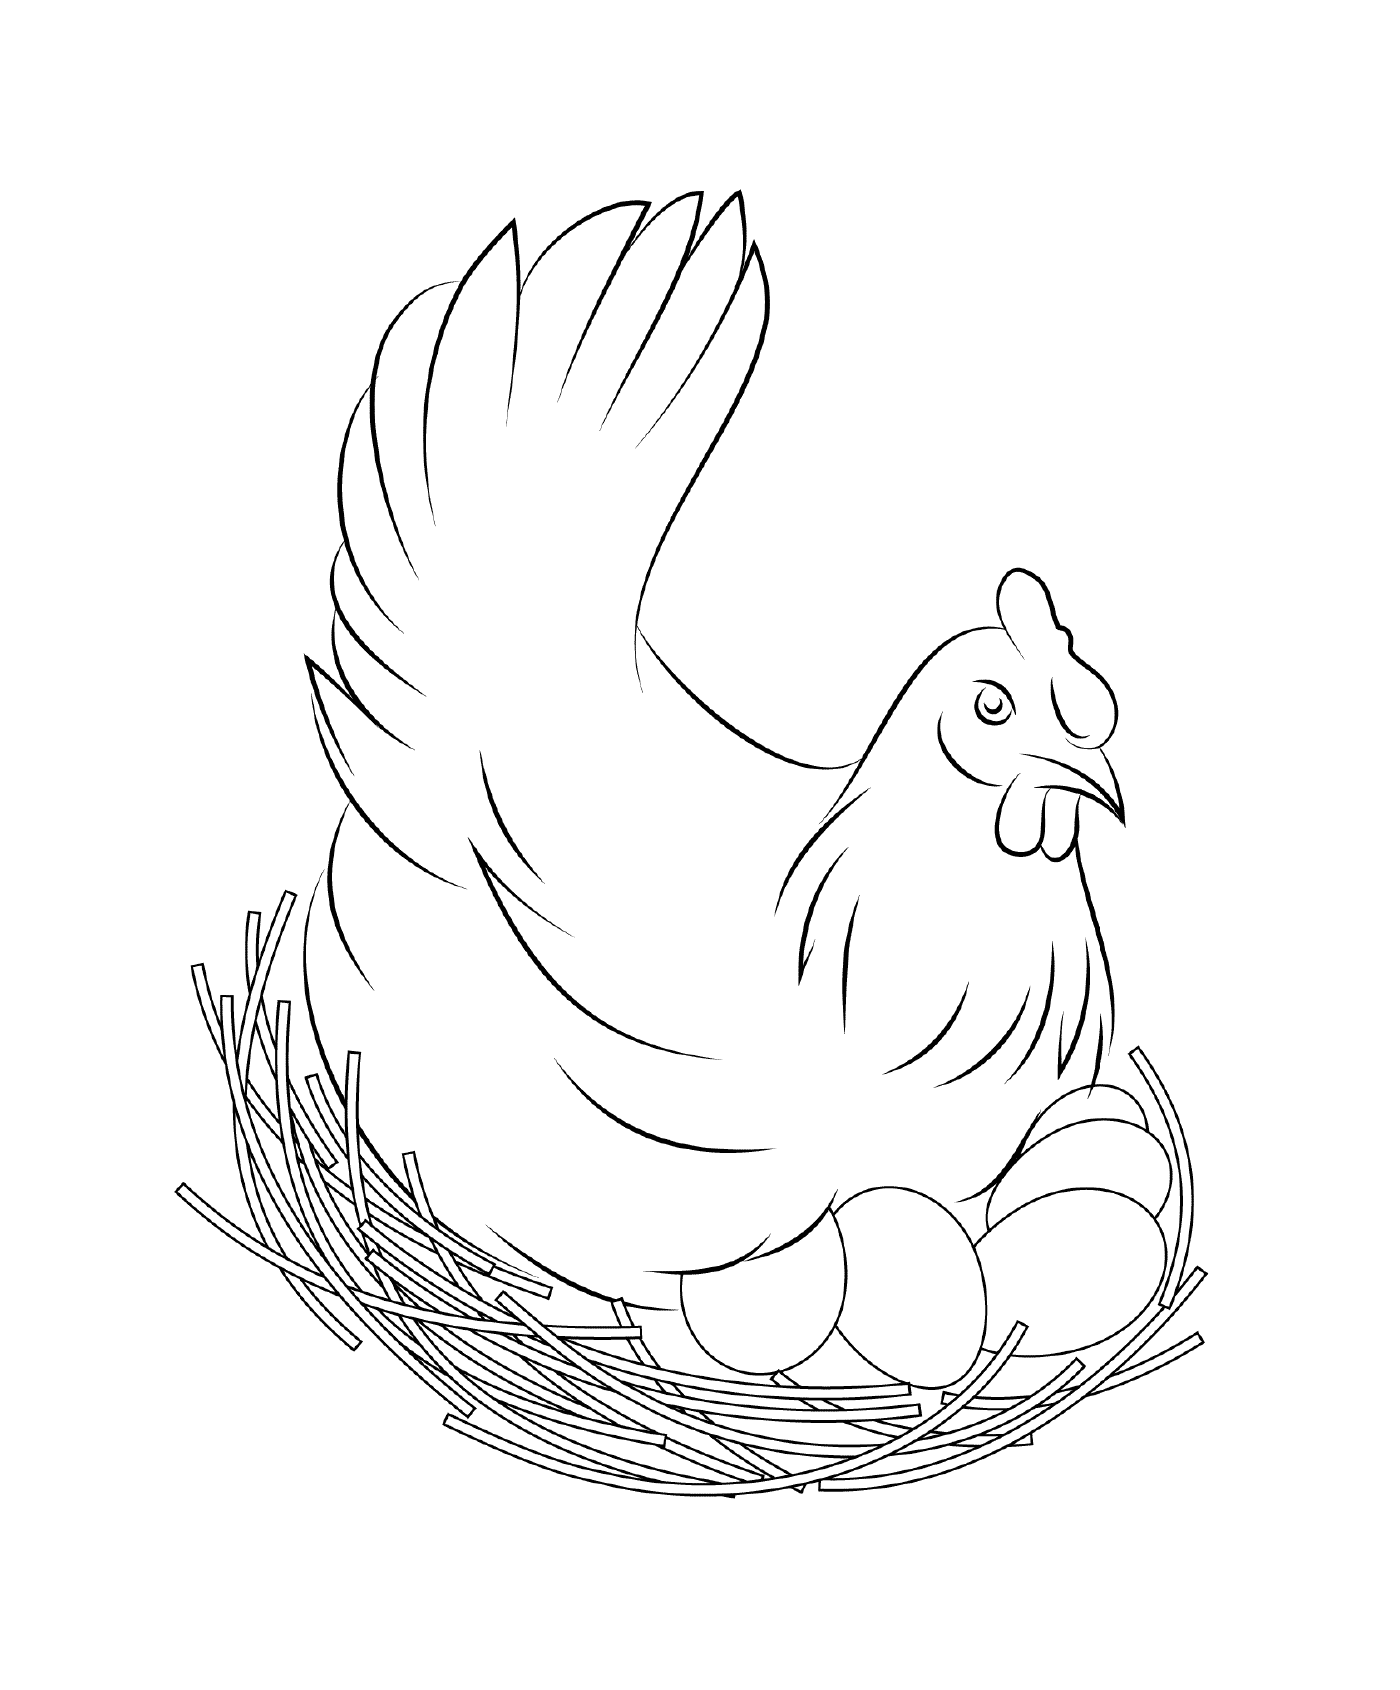  Incubating chicken in nest 